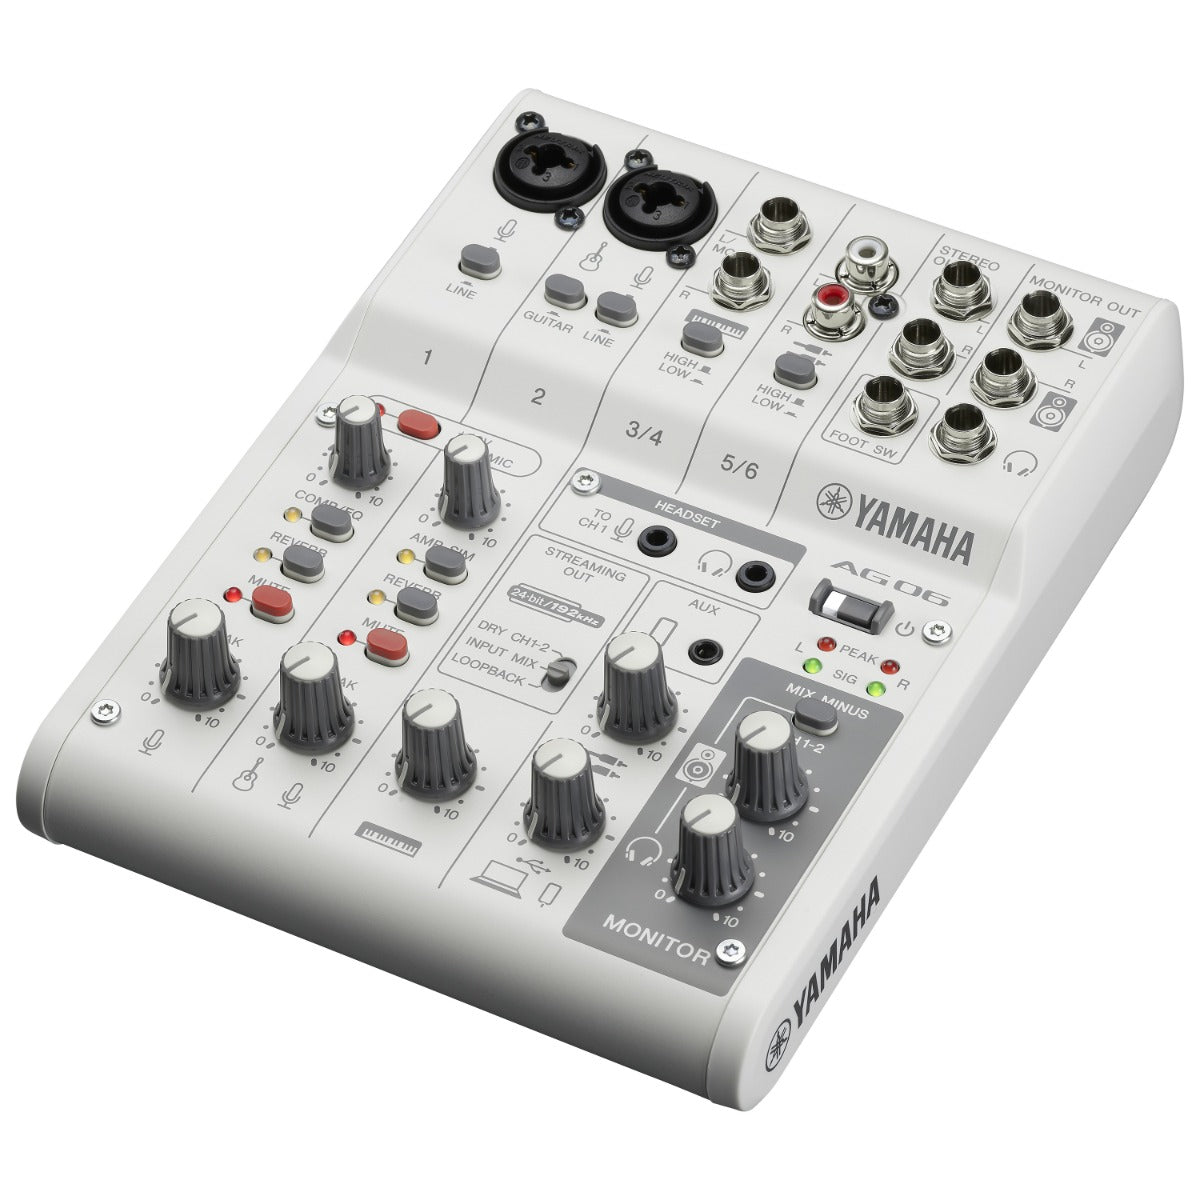 Yamaha AG06 Mk2 Live Streaming Mixer and USB Audio Interface - White